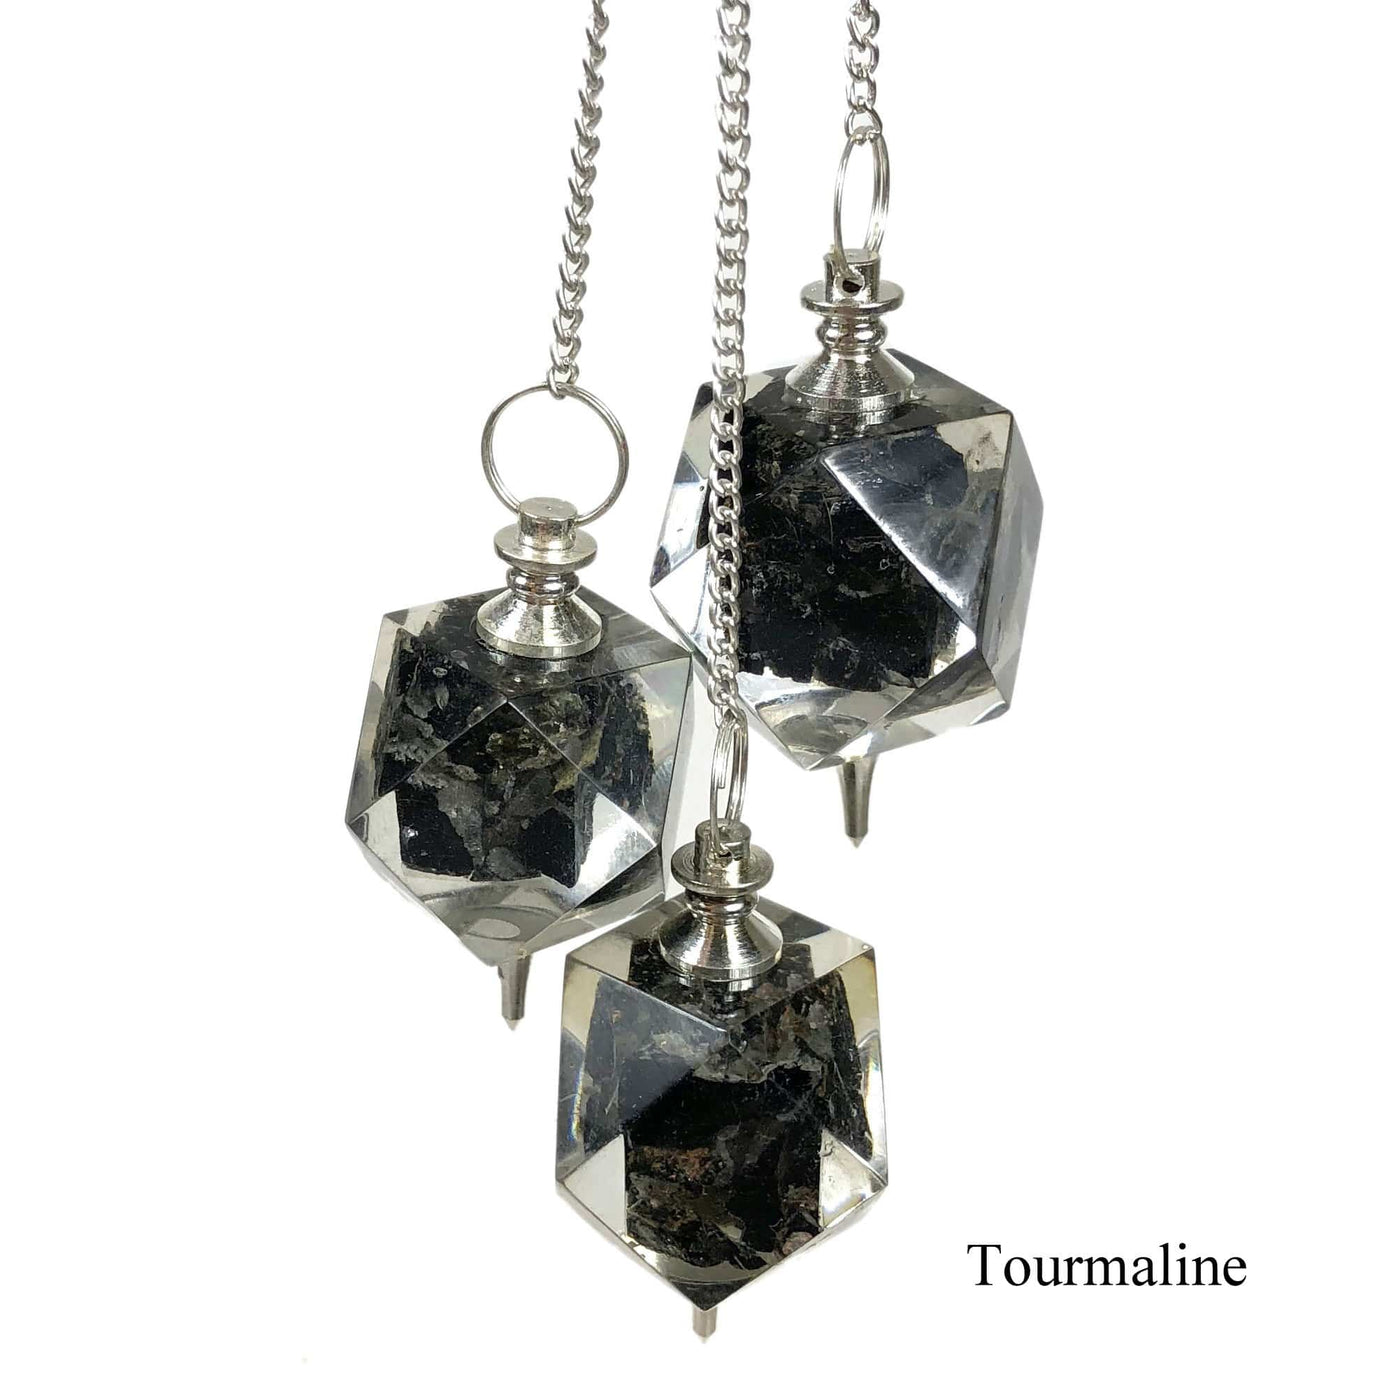 Three Tourmaline Pendulum with silver chain